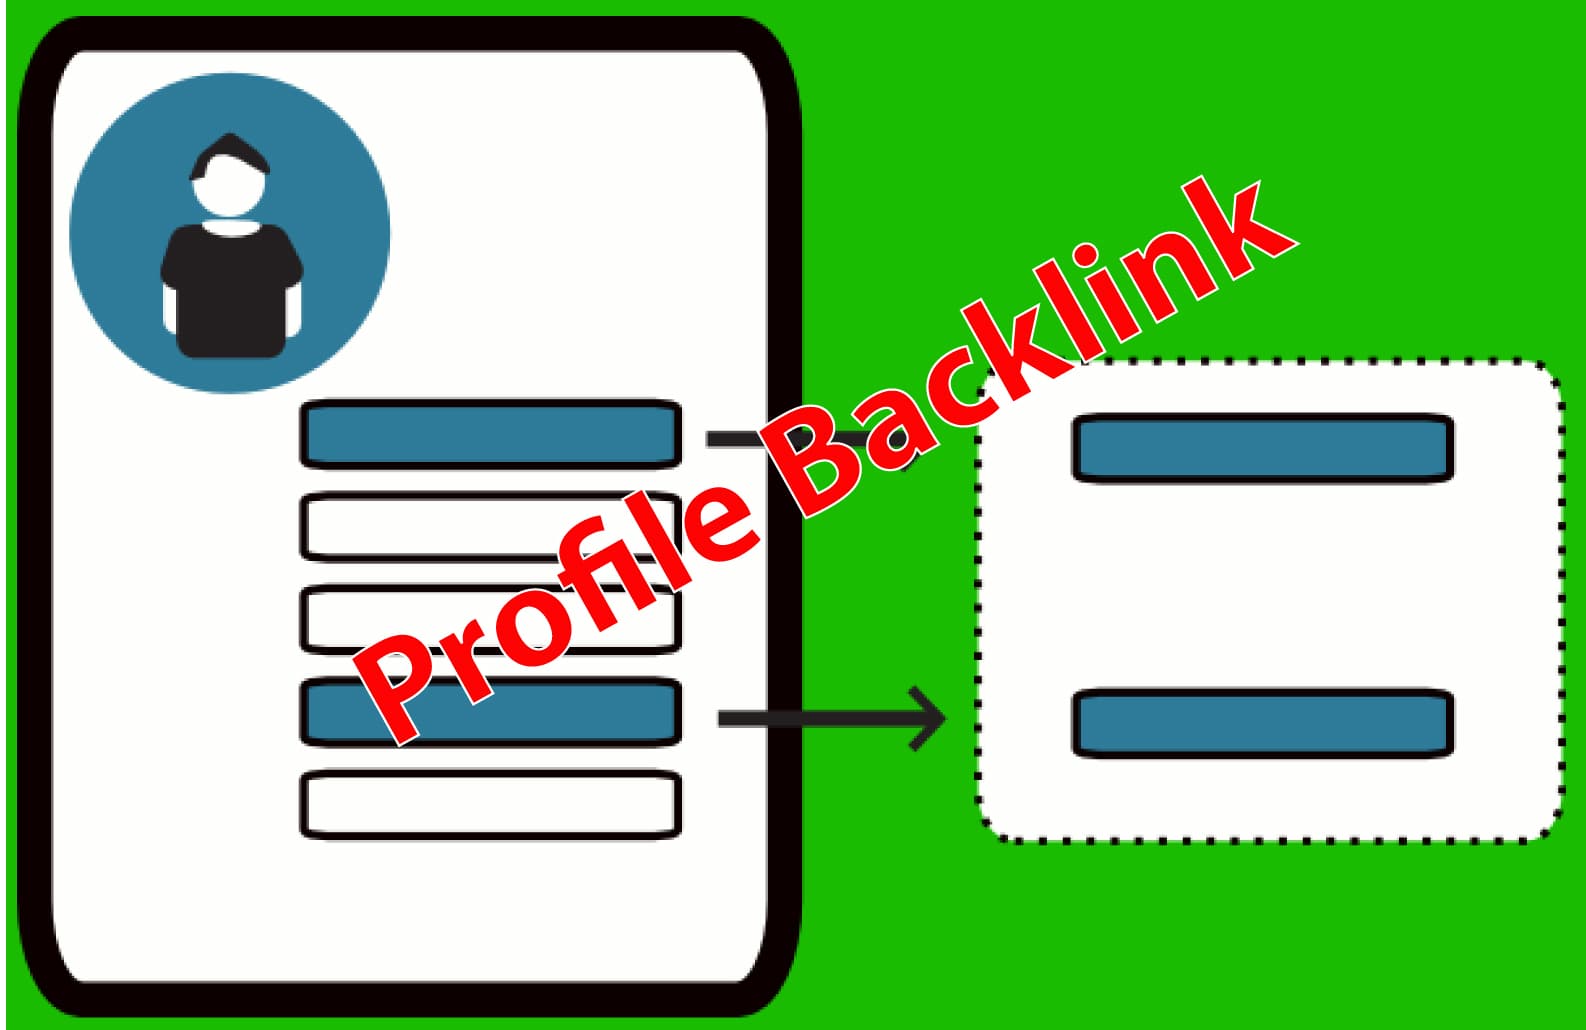 Profile backlink will increase your seo score